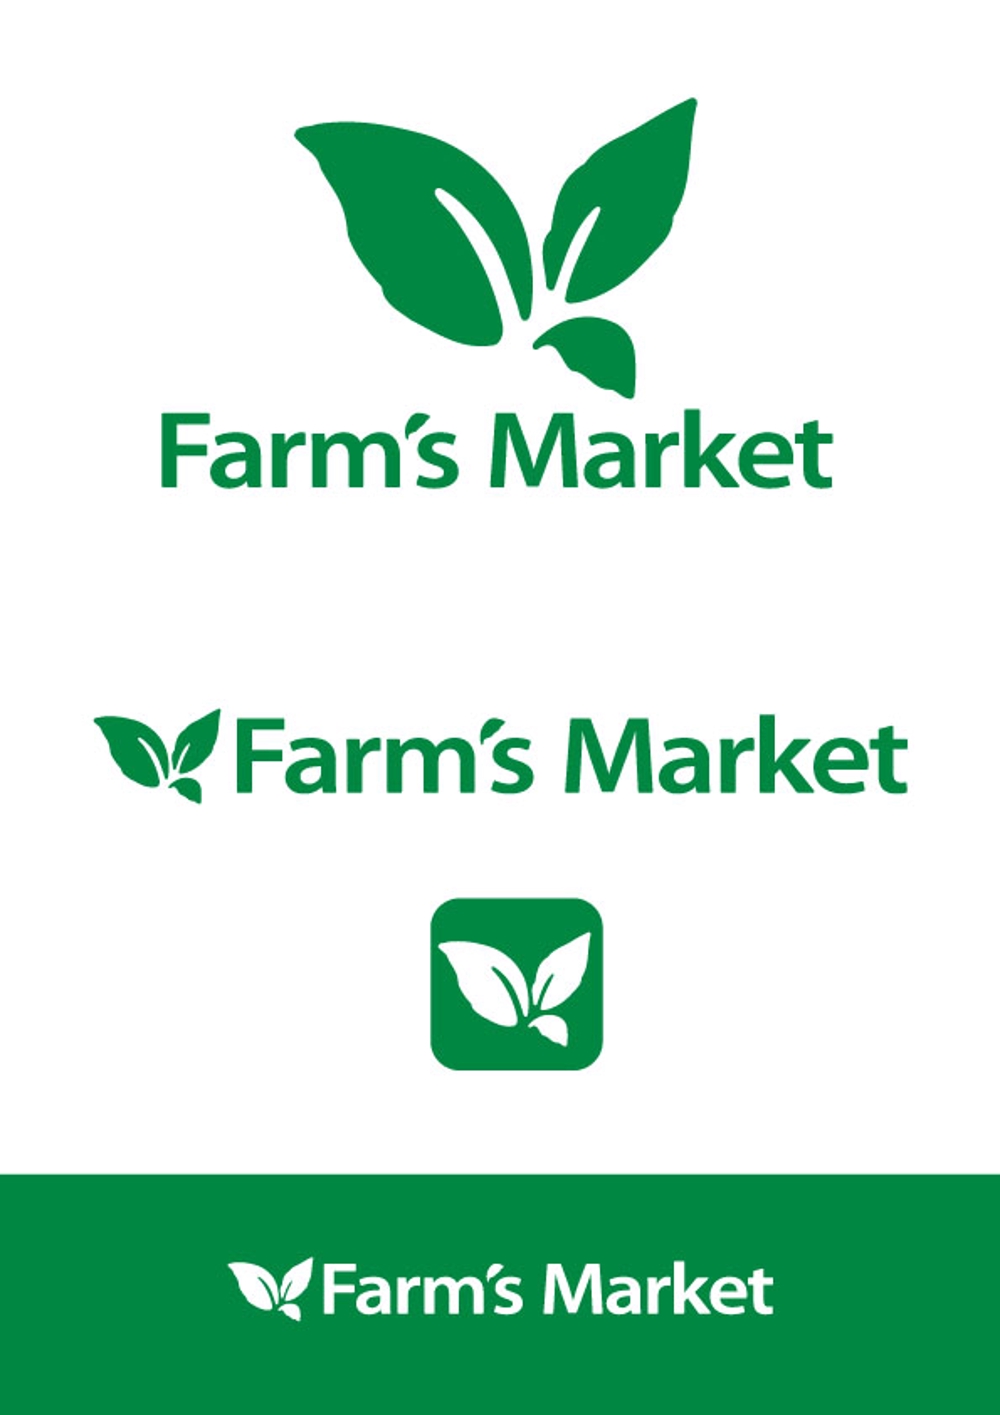 Farm's Market01.jpg